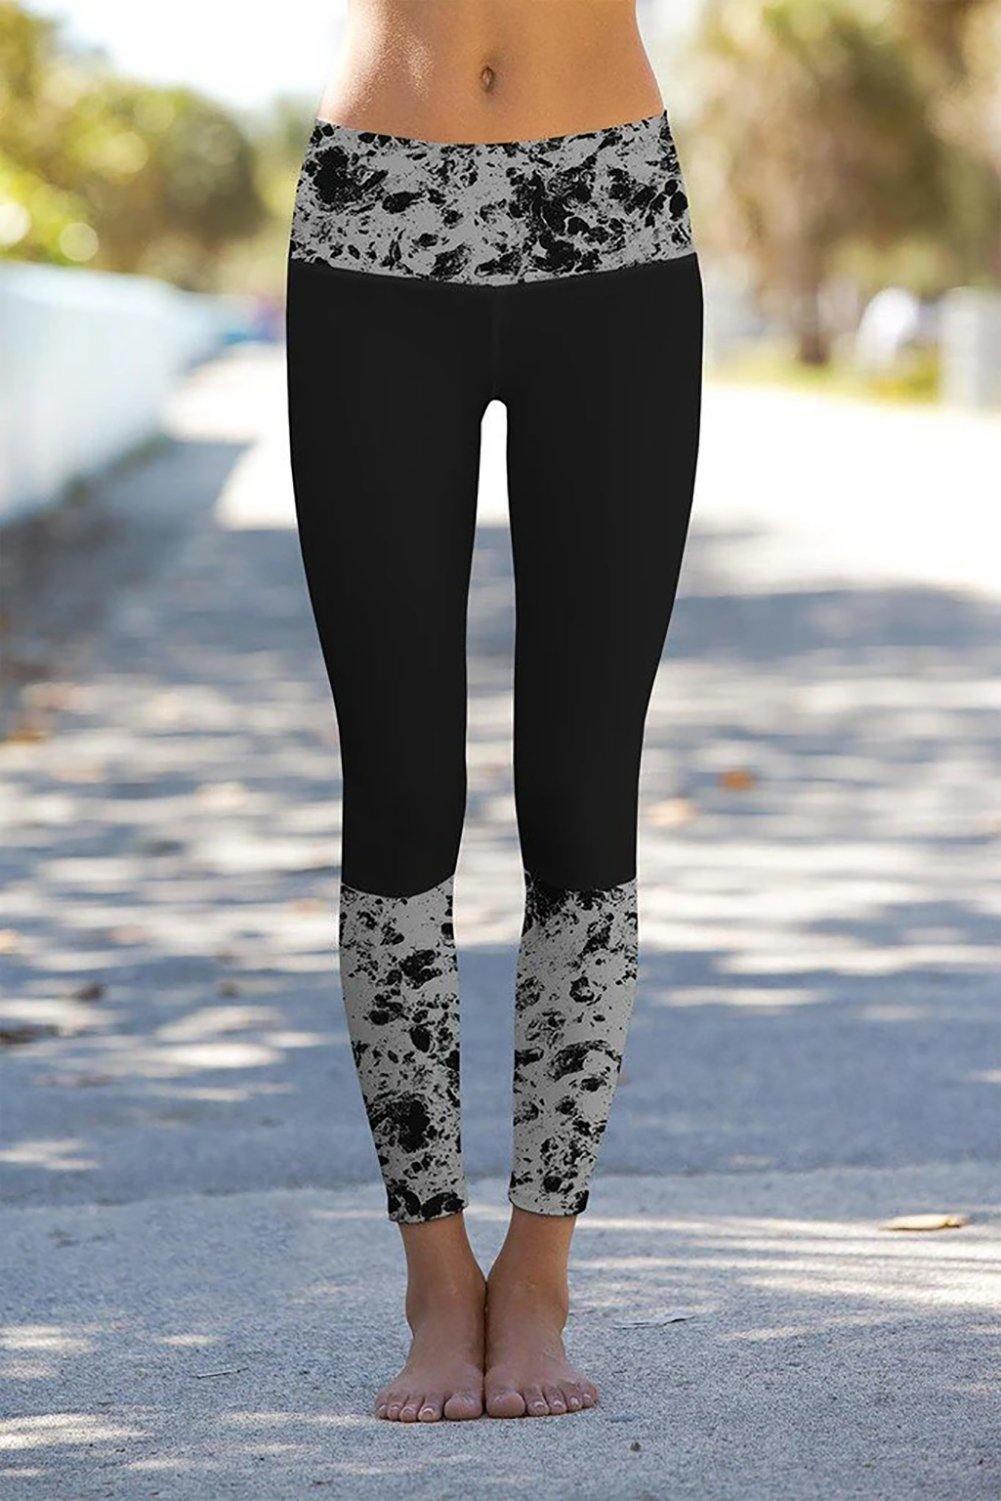 Floral Printed Details Leggings Yoga Pants - L & M Kee, LLC